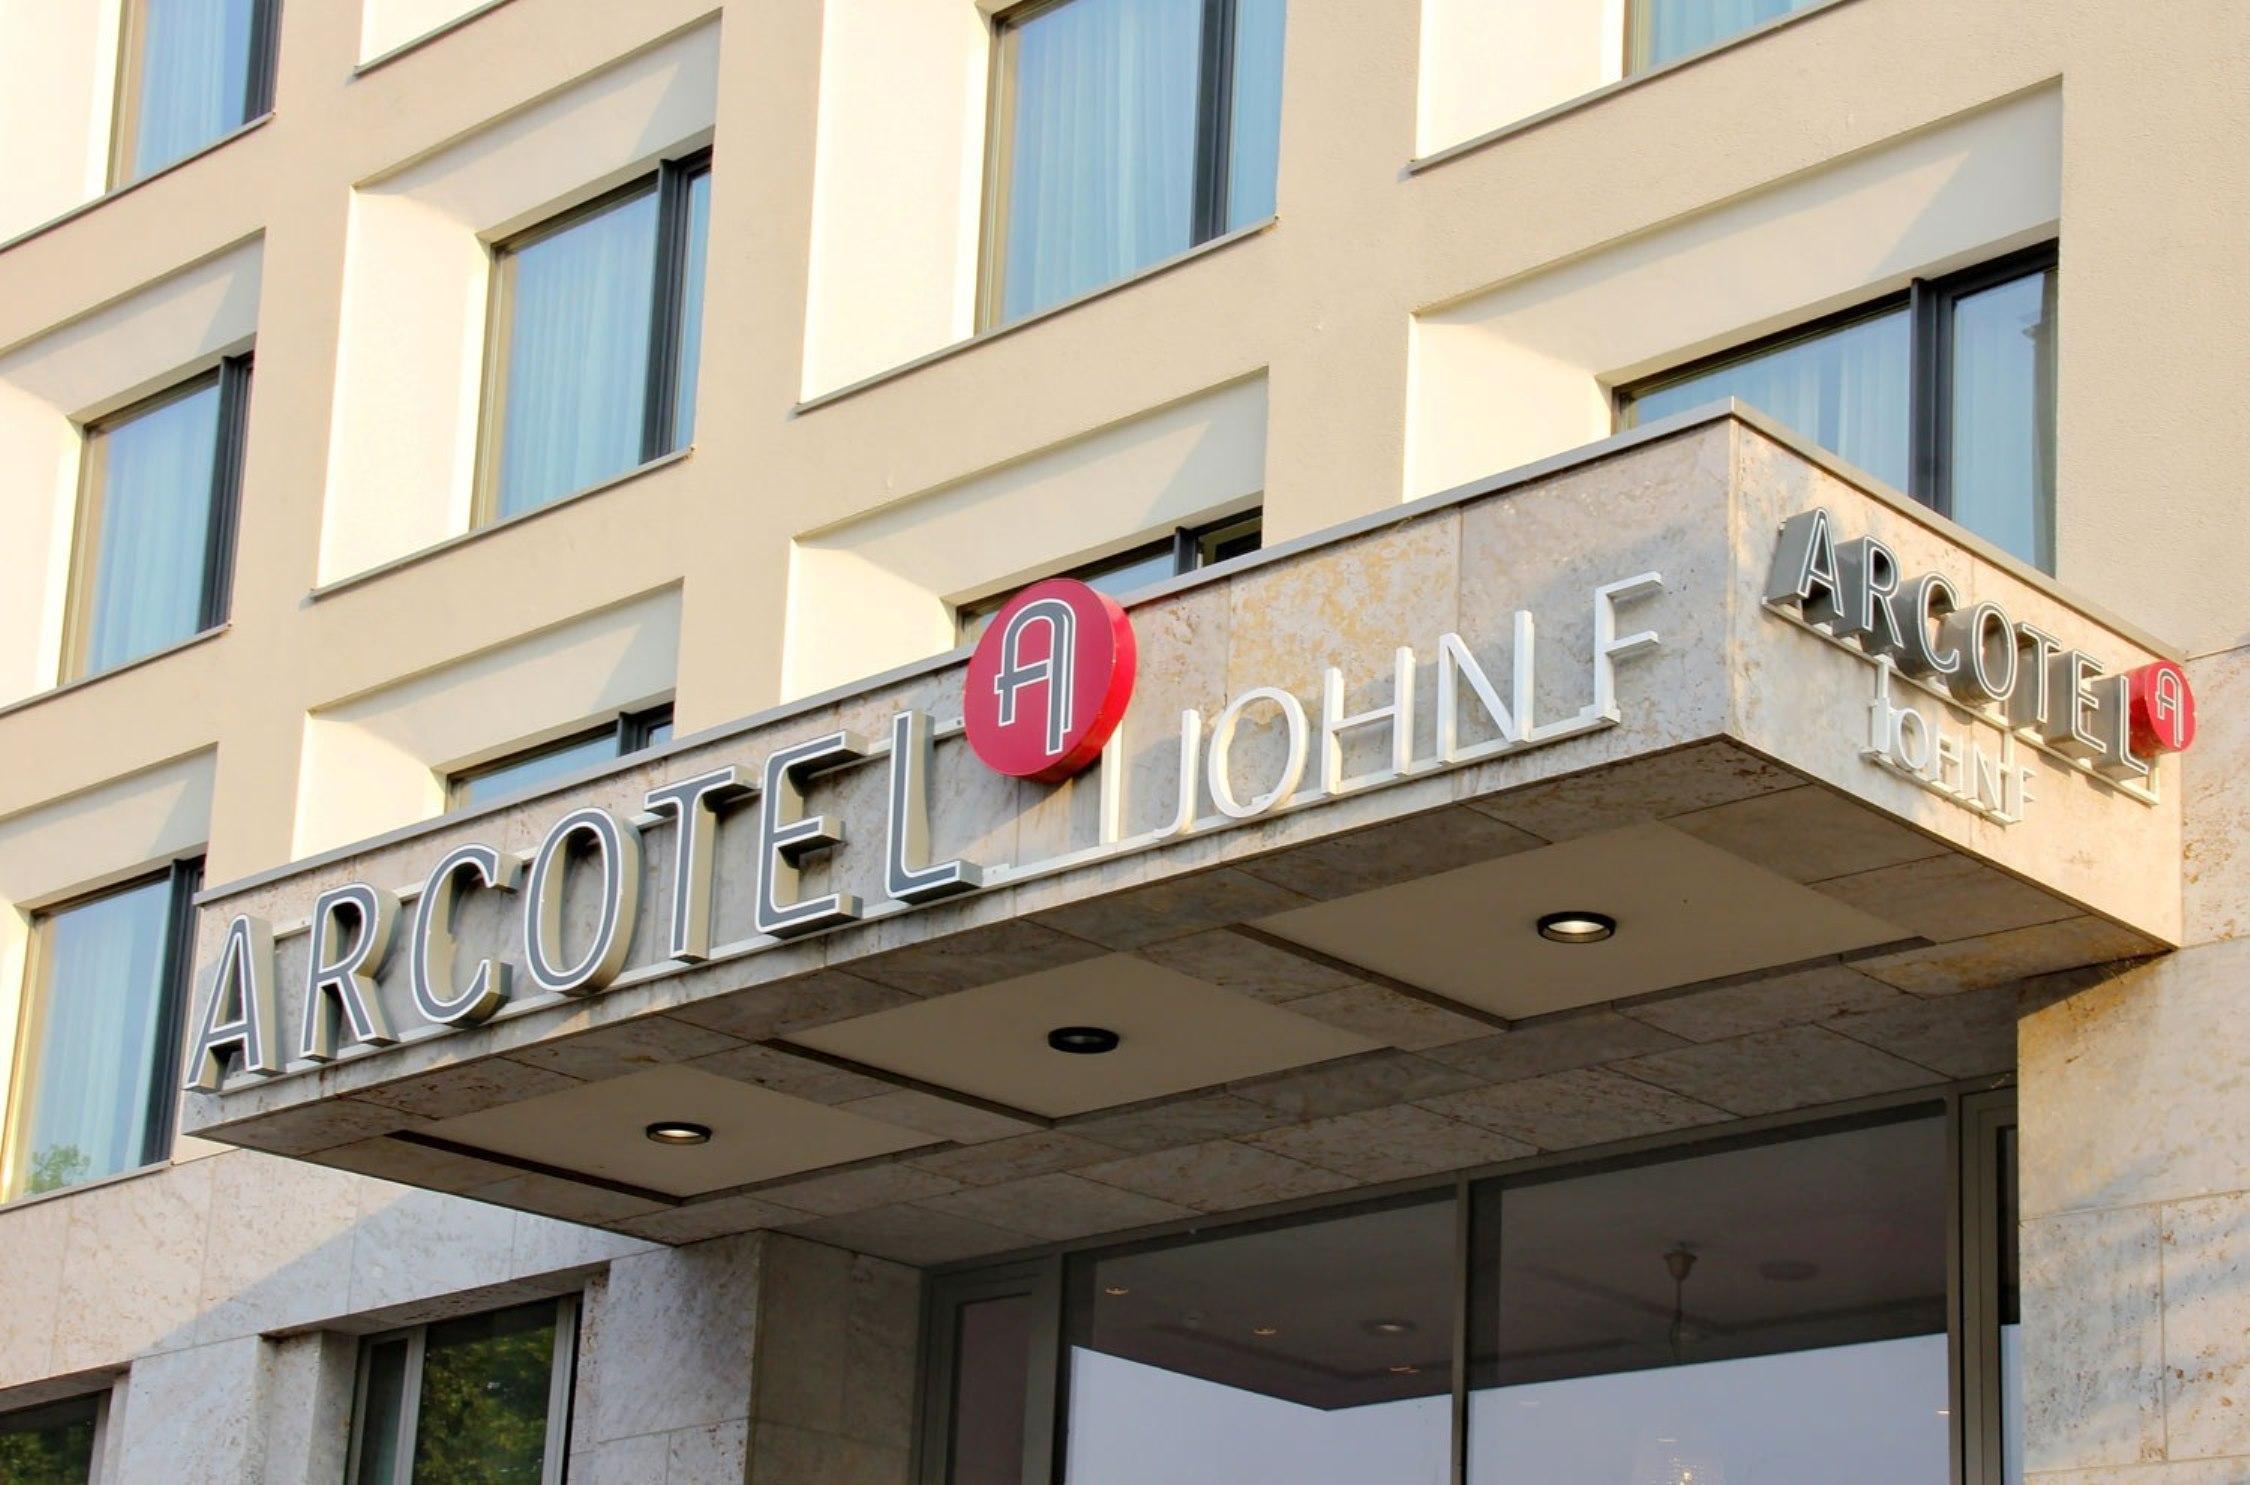 Arcotel John F Berlín Exterior foto